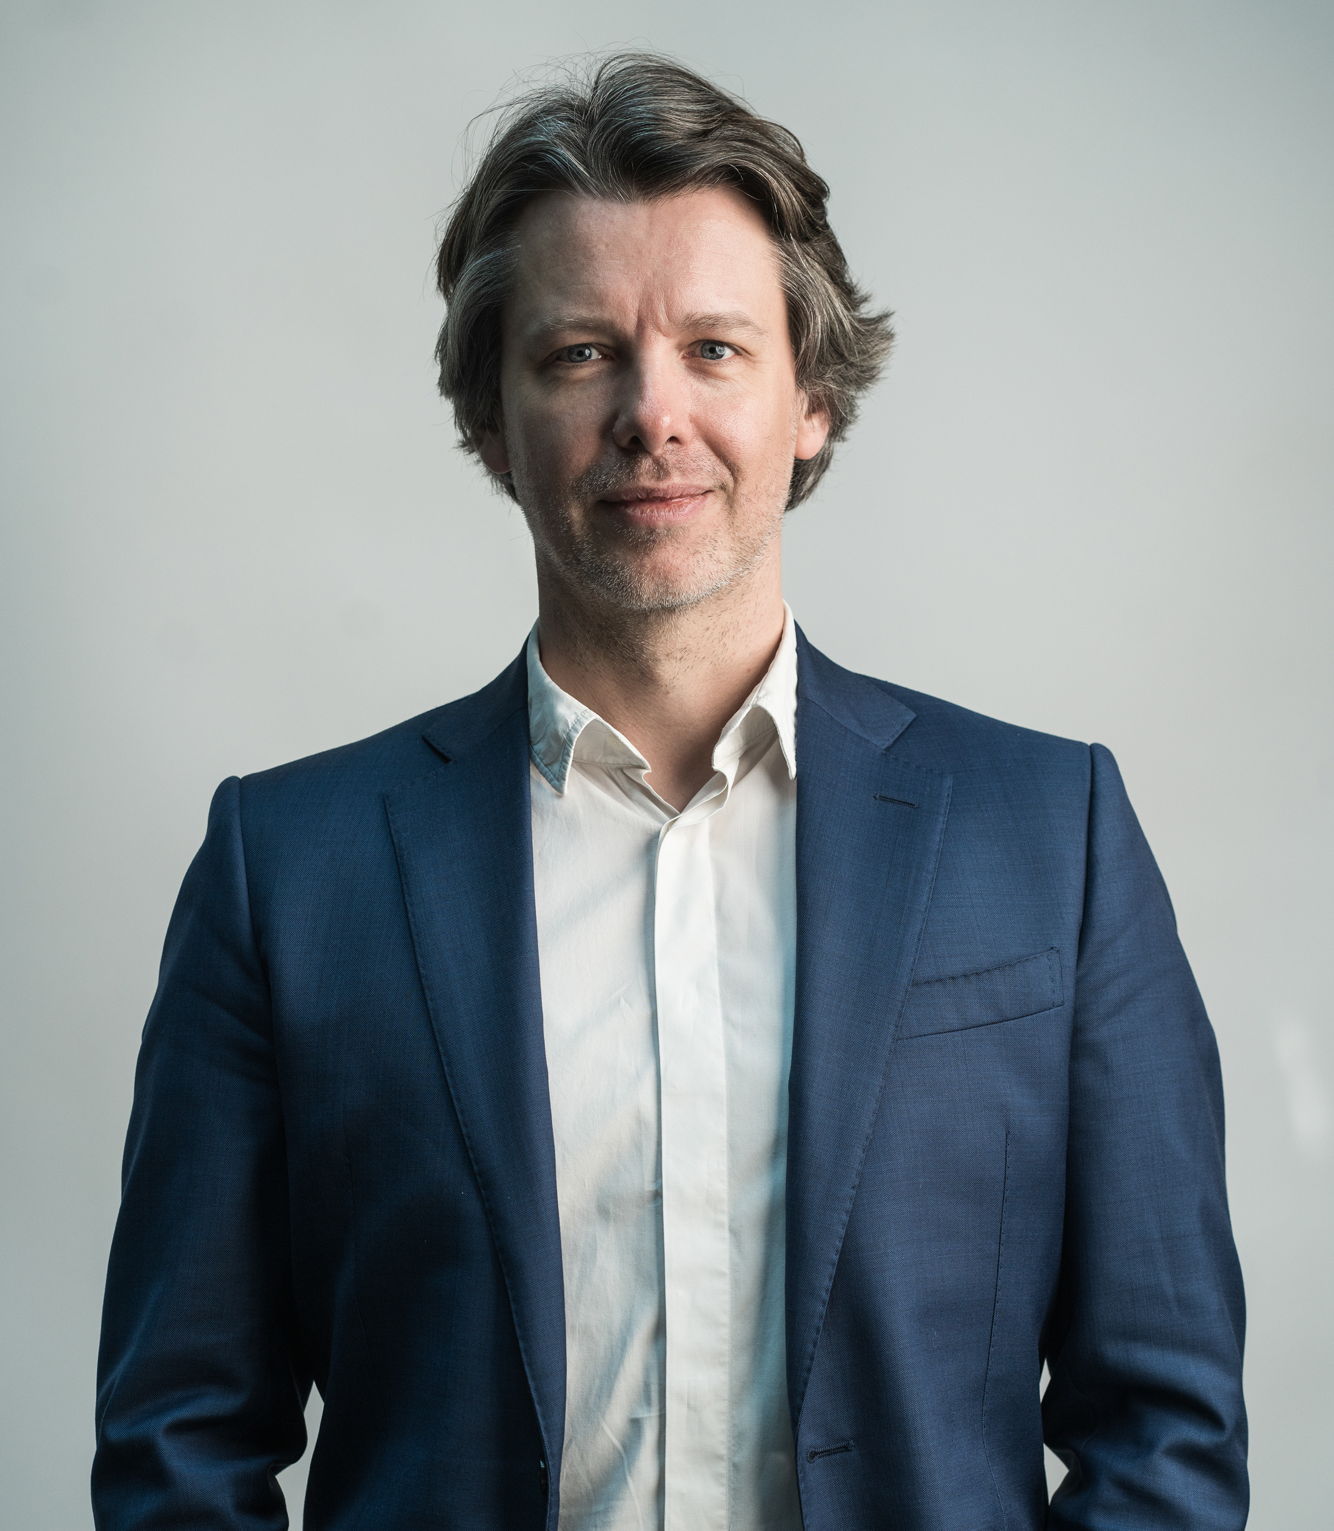 Roeland Pelgrims, CEO of Nobi